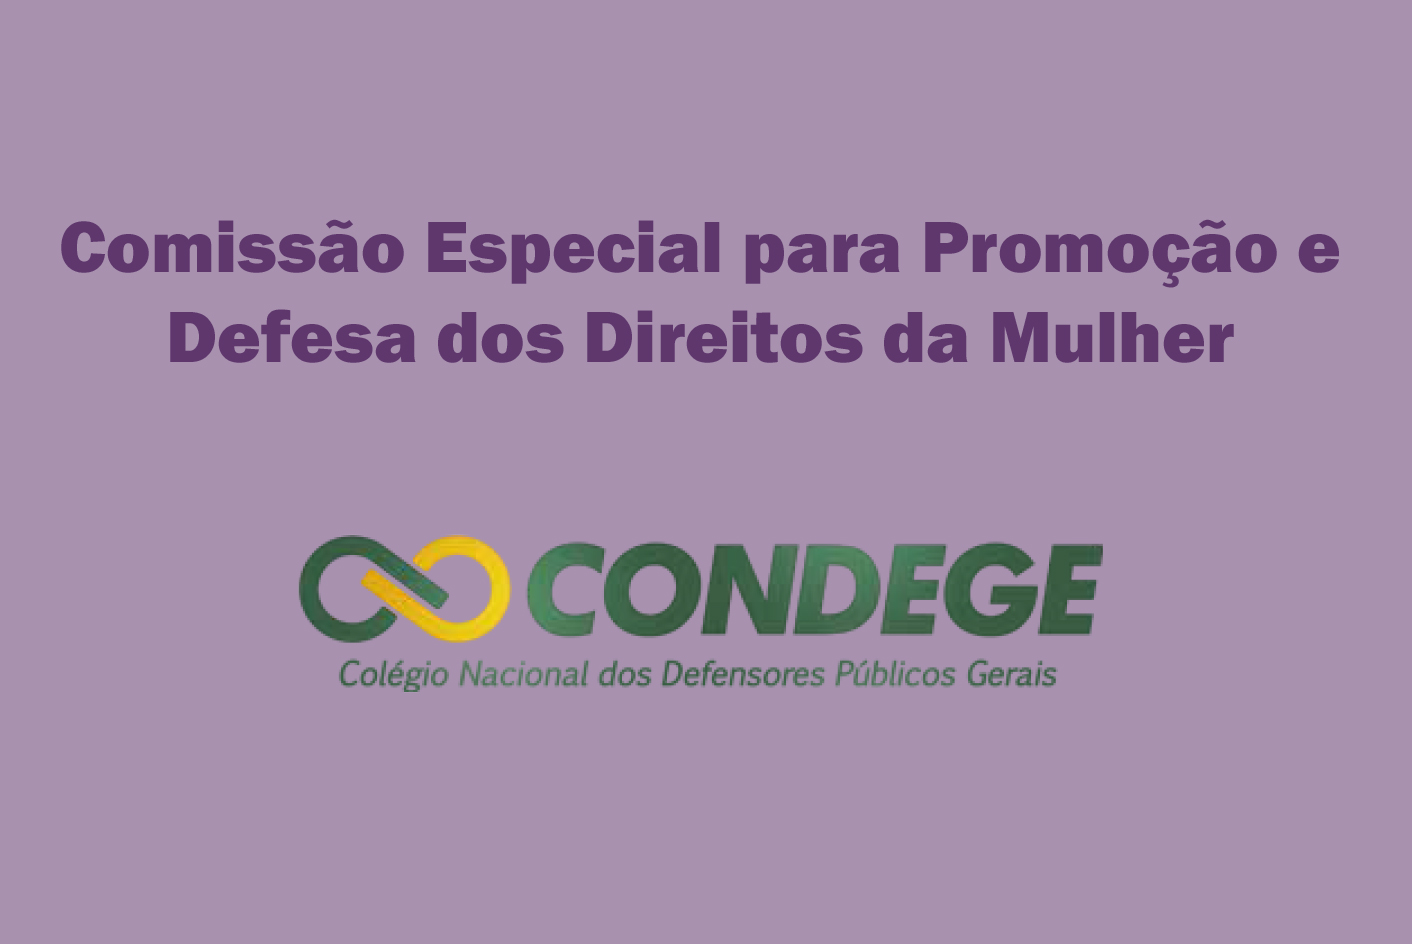 CDDM_Condege